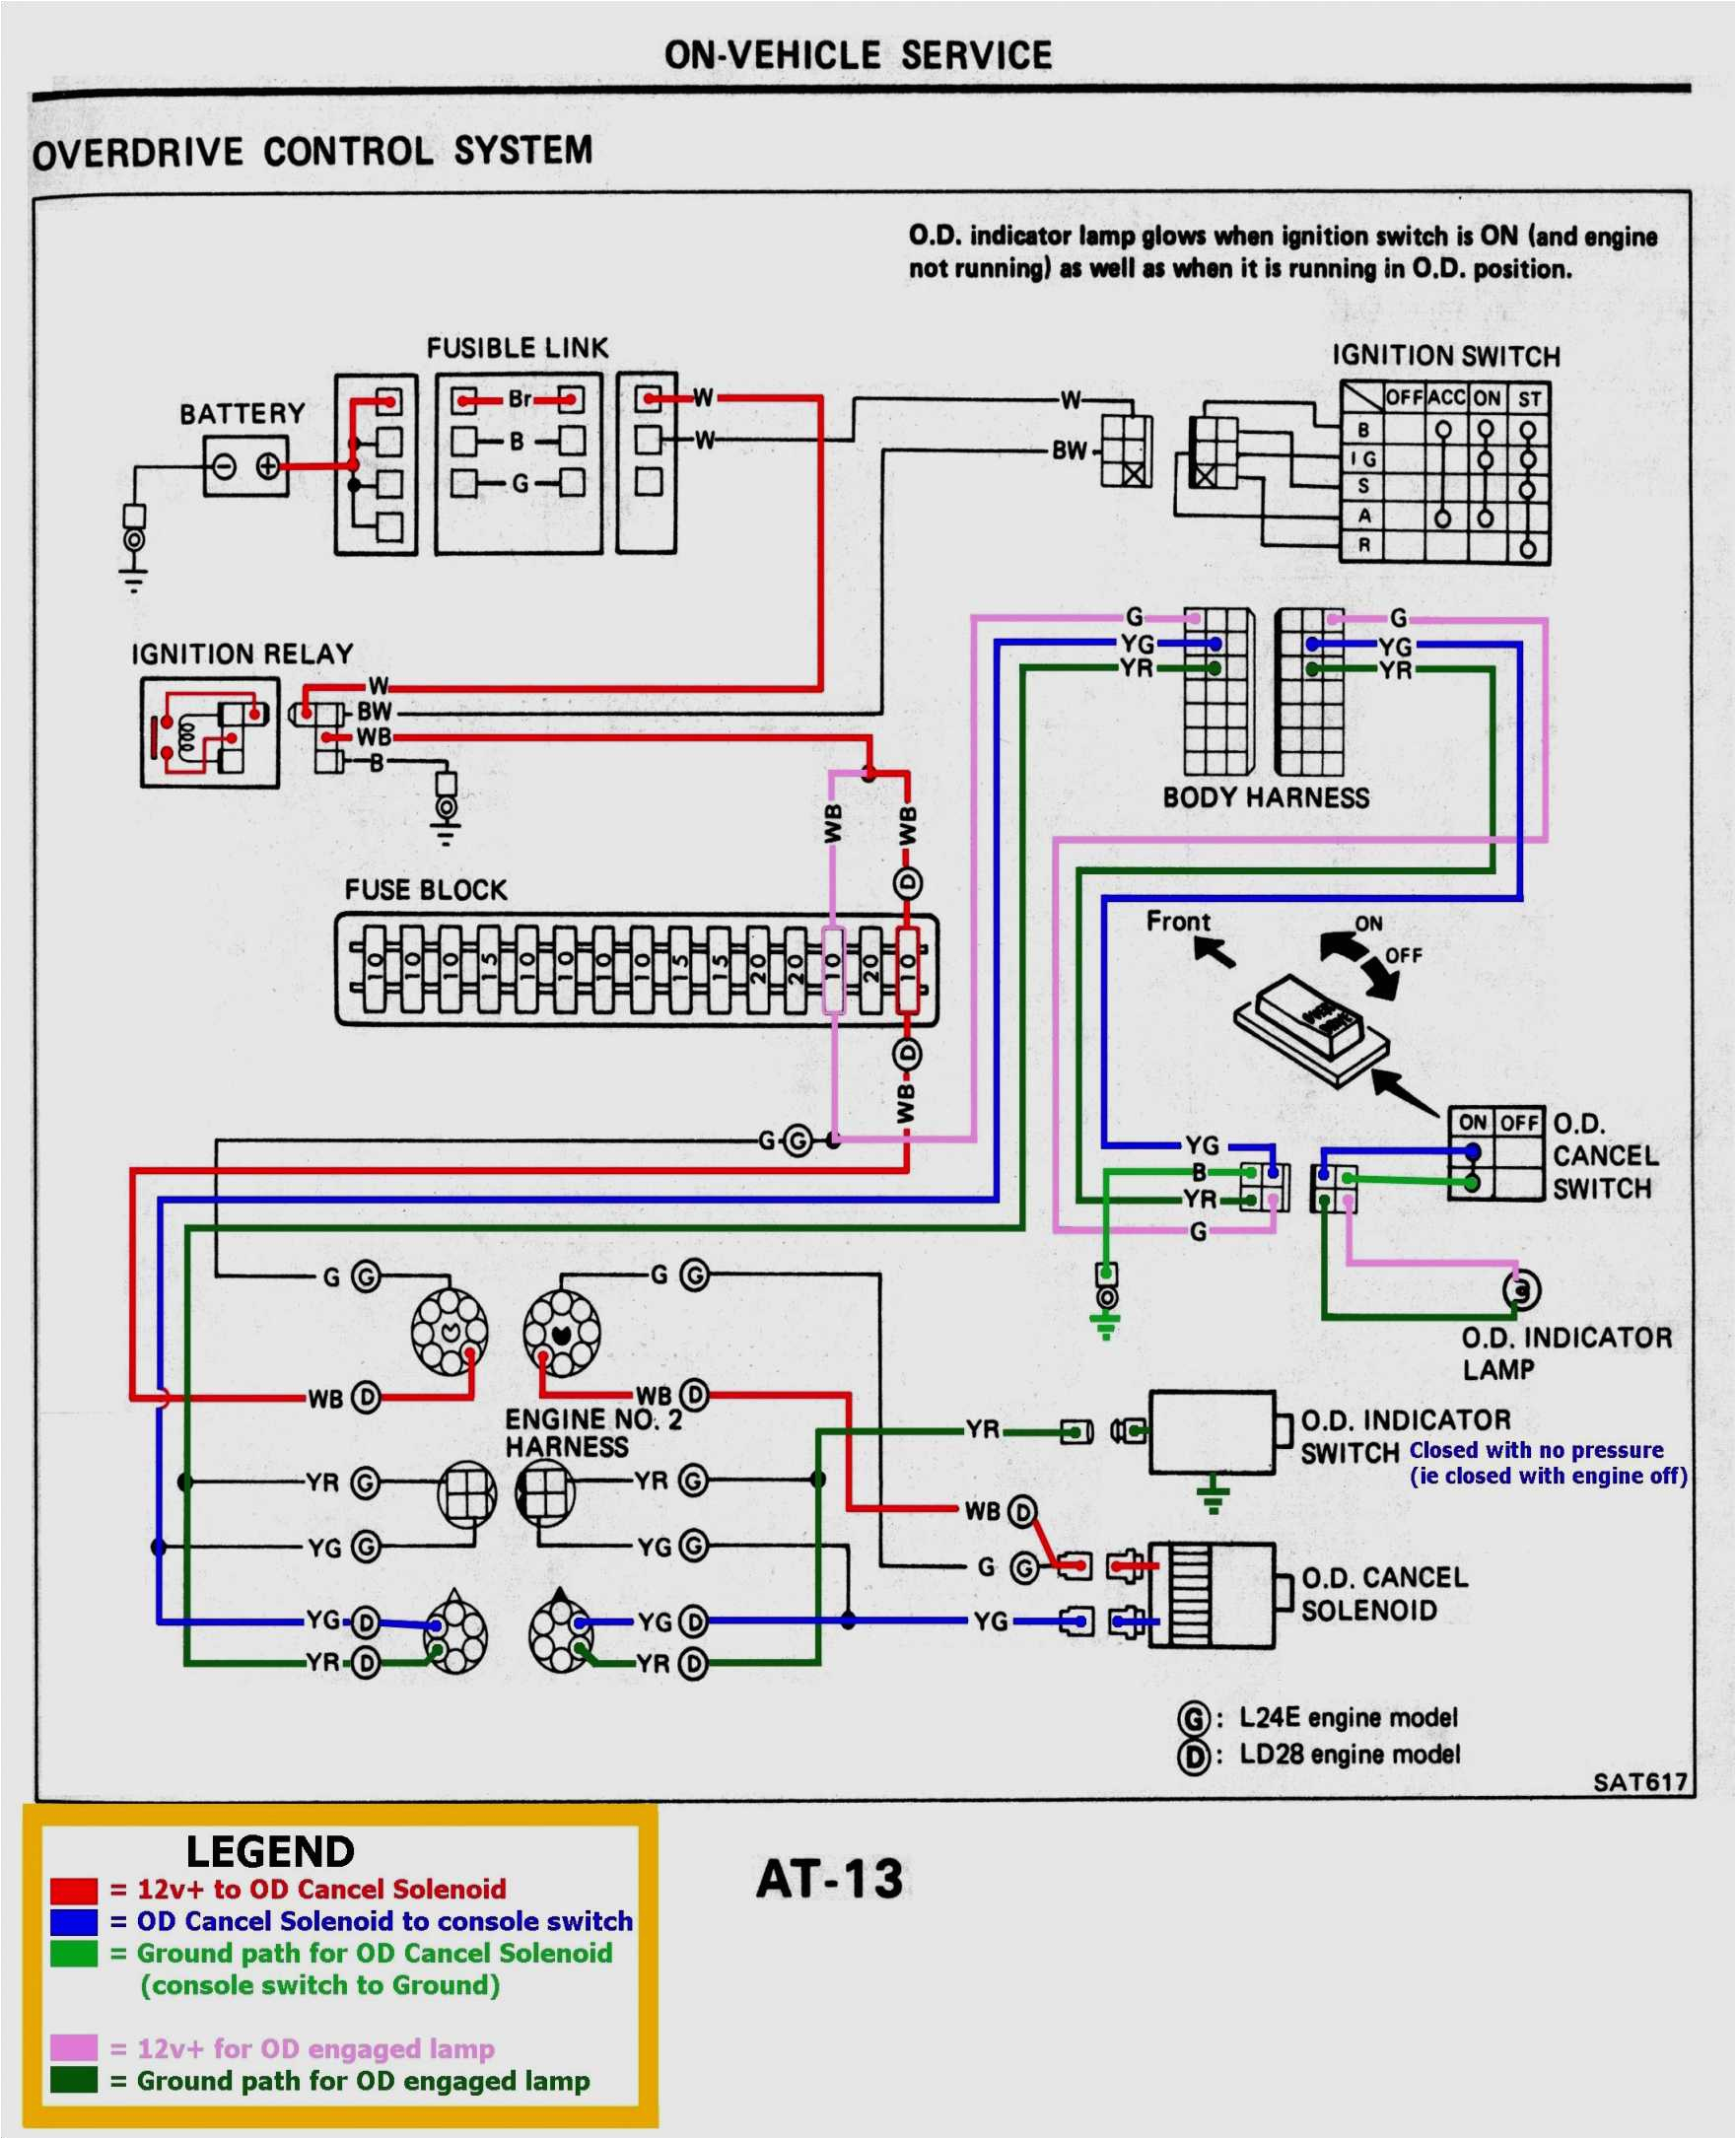 2001 ford f150 radio wiring diagram 2002 oldsmobile alero wiring diagram private sharing about wiring of 2001 ford f150 radio wiring diagram jpg